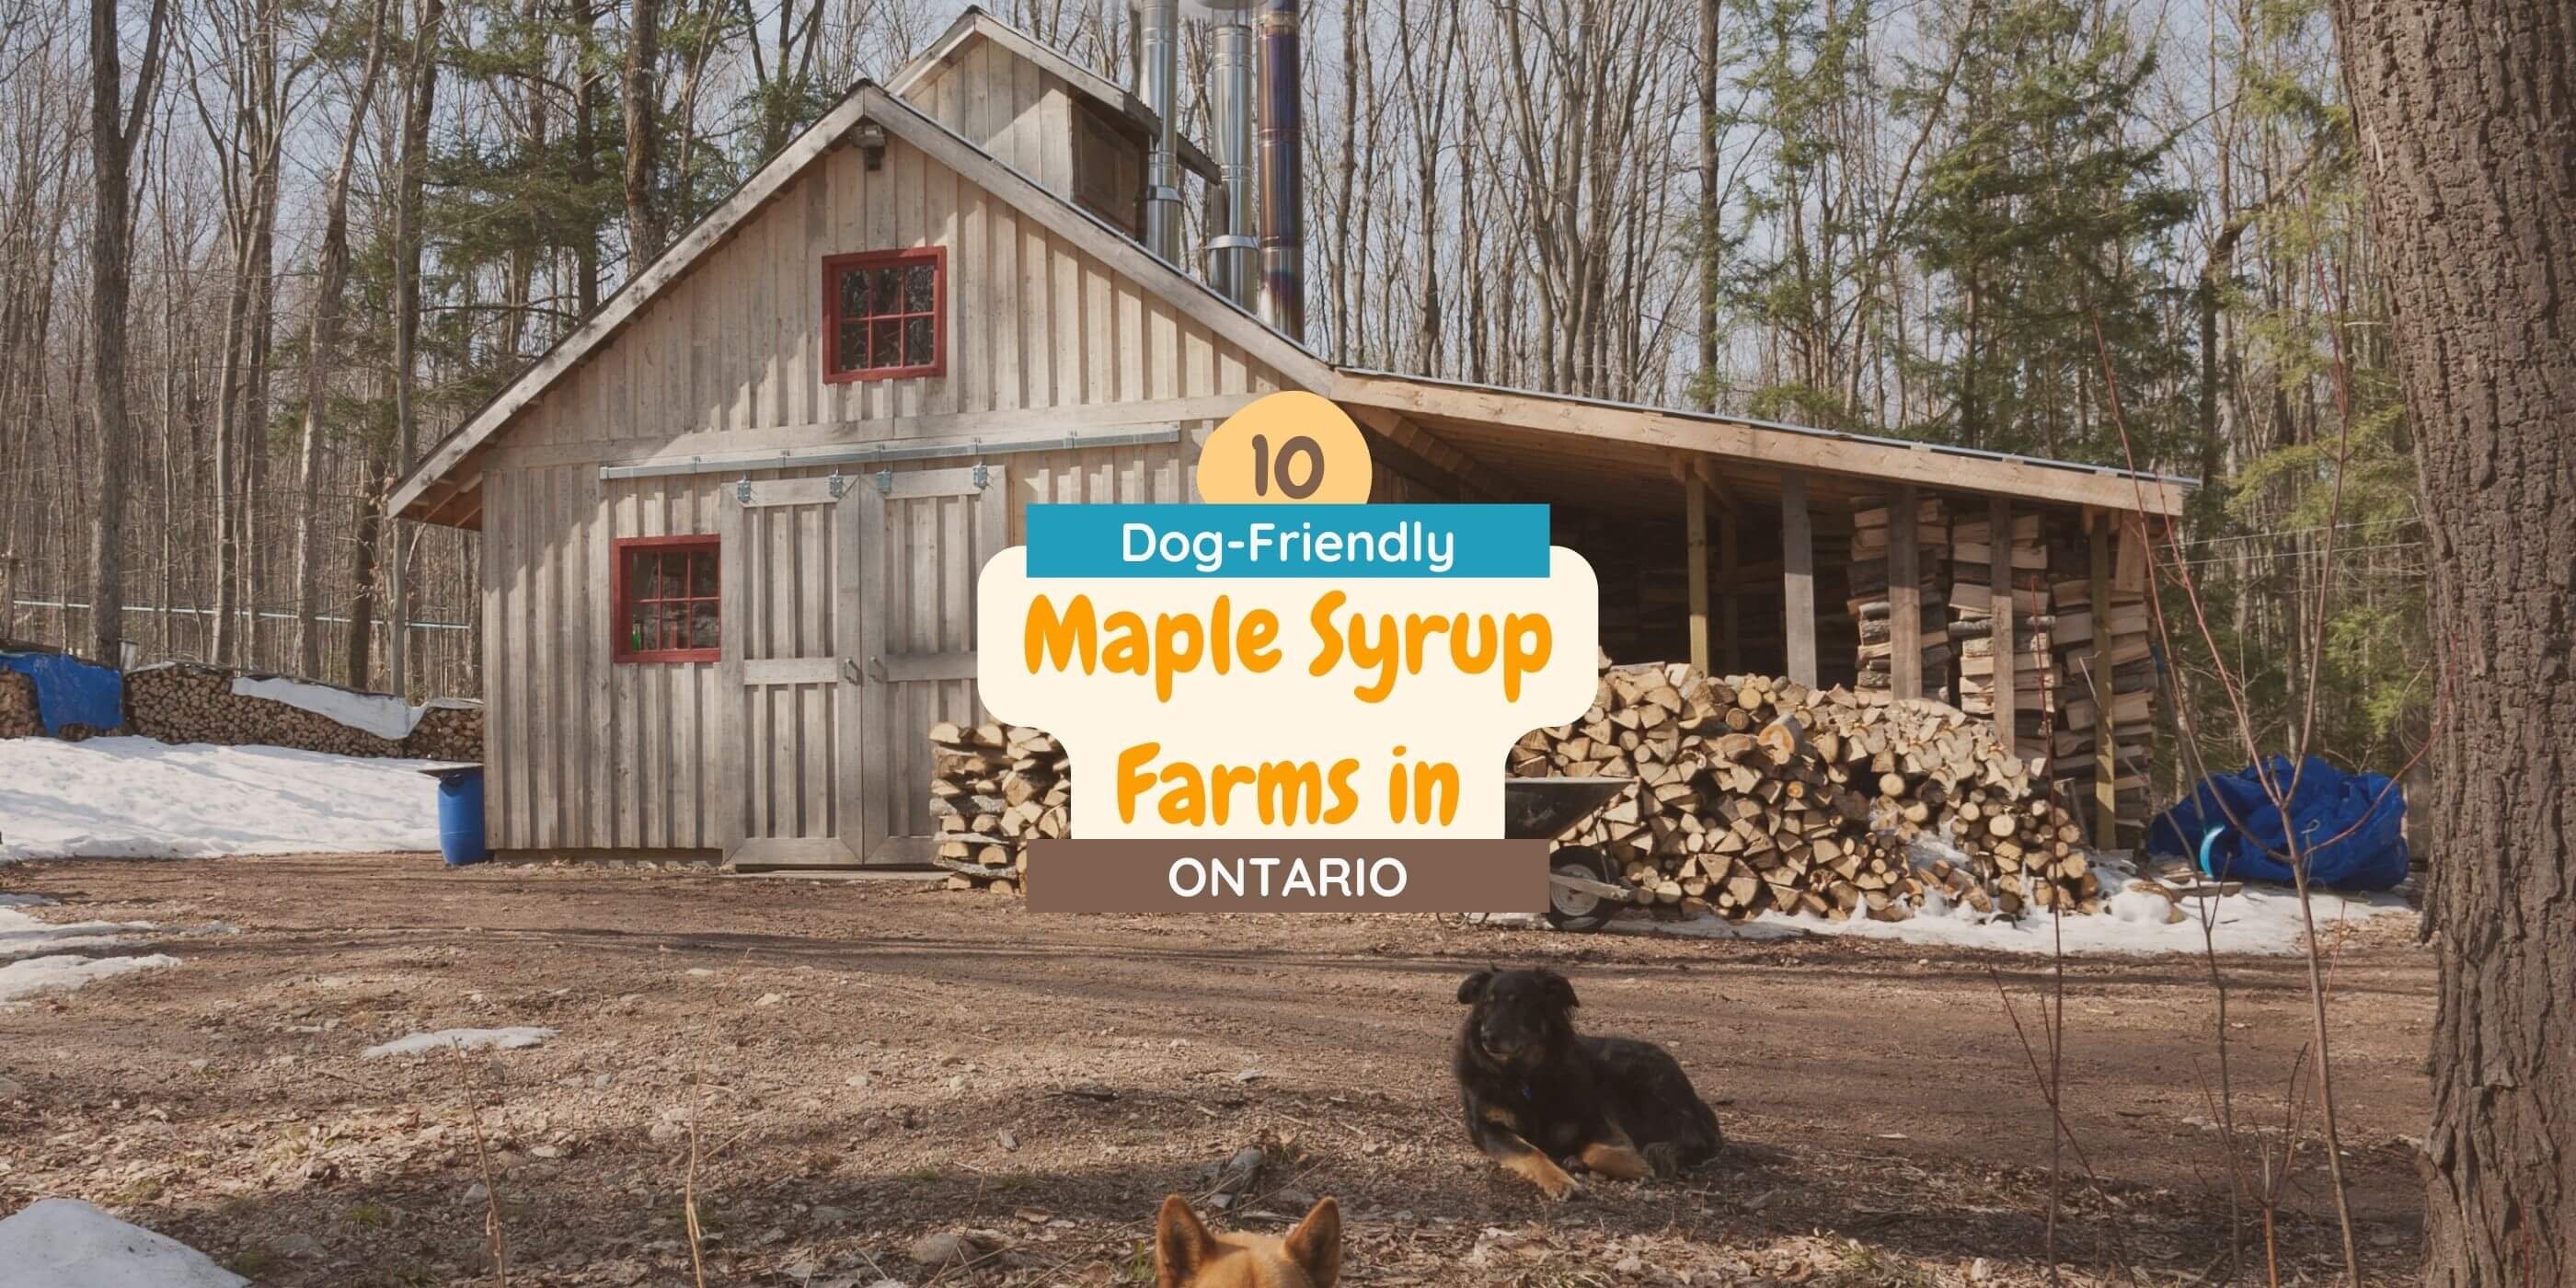 visit maple syrup farm canada